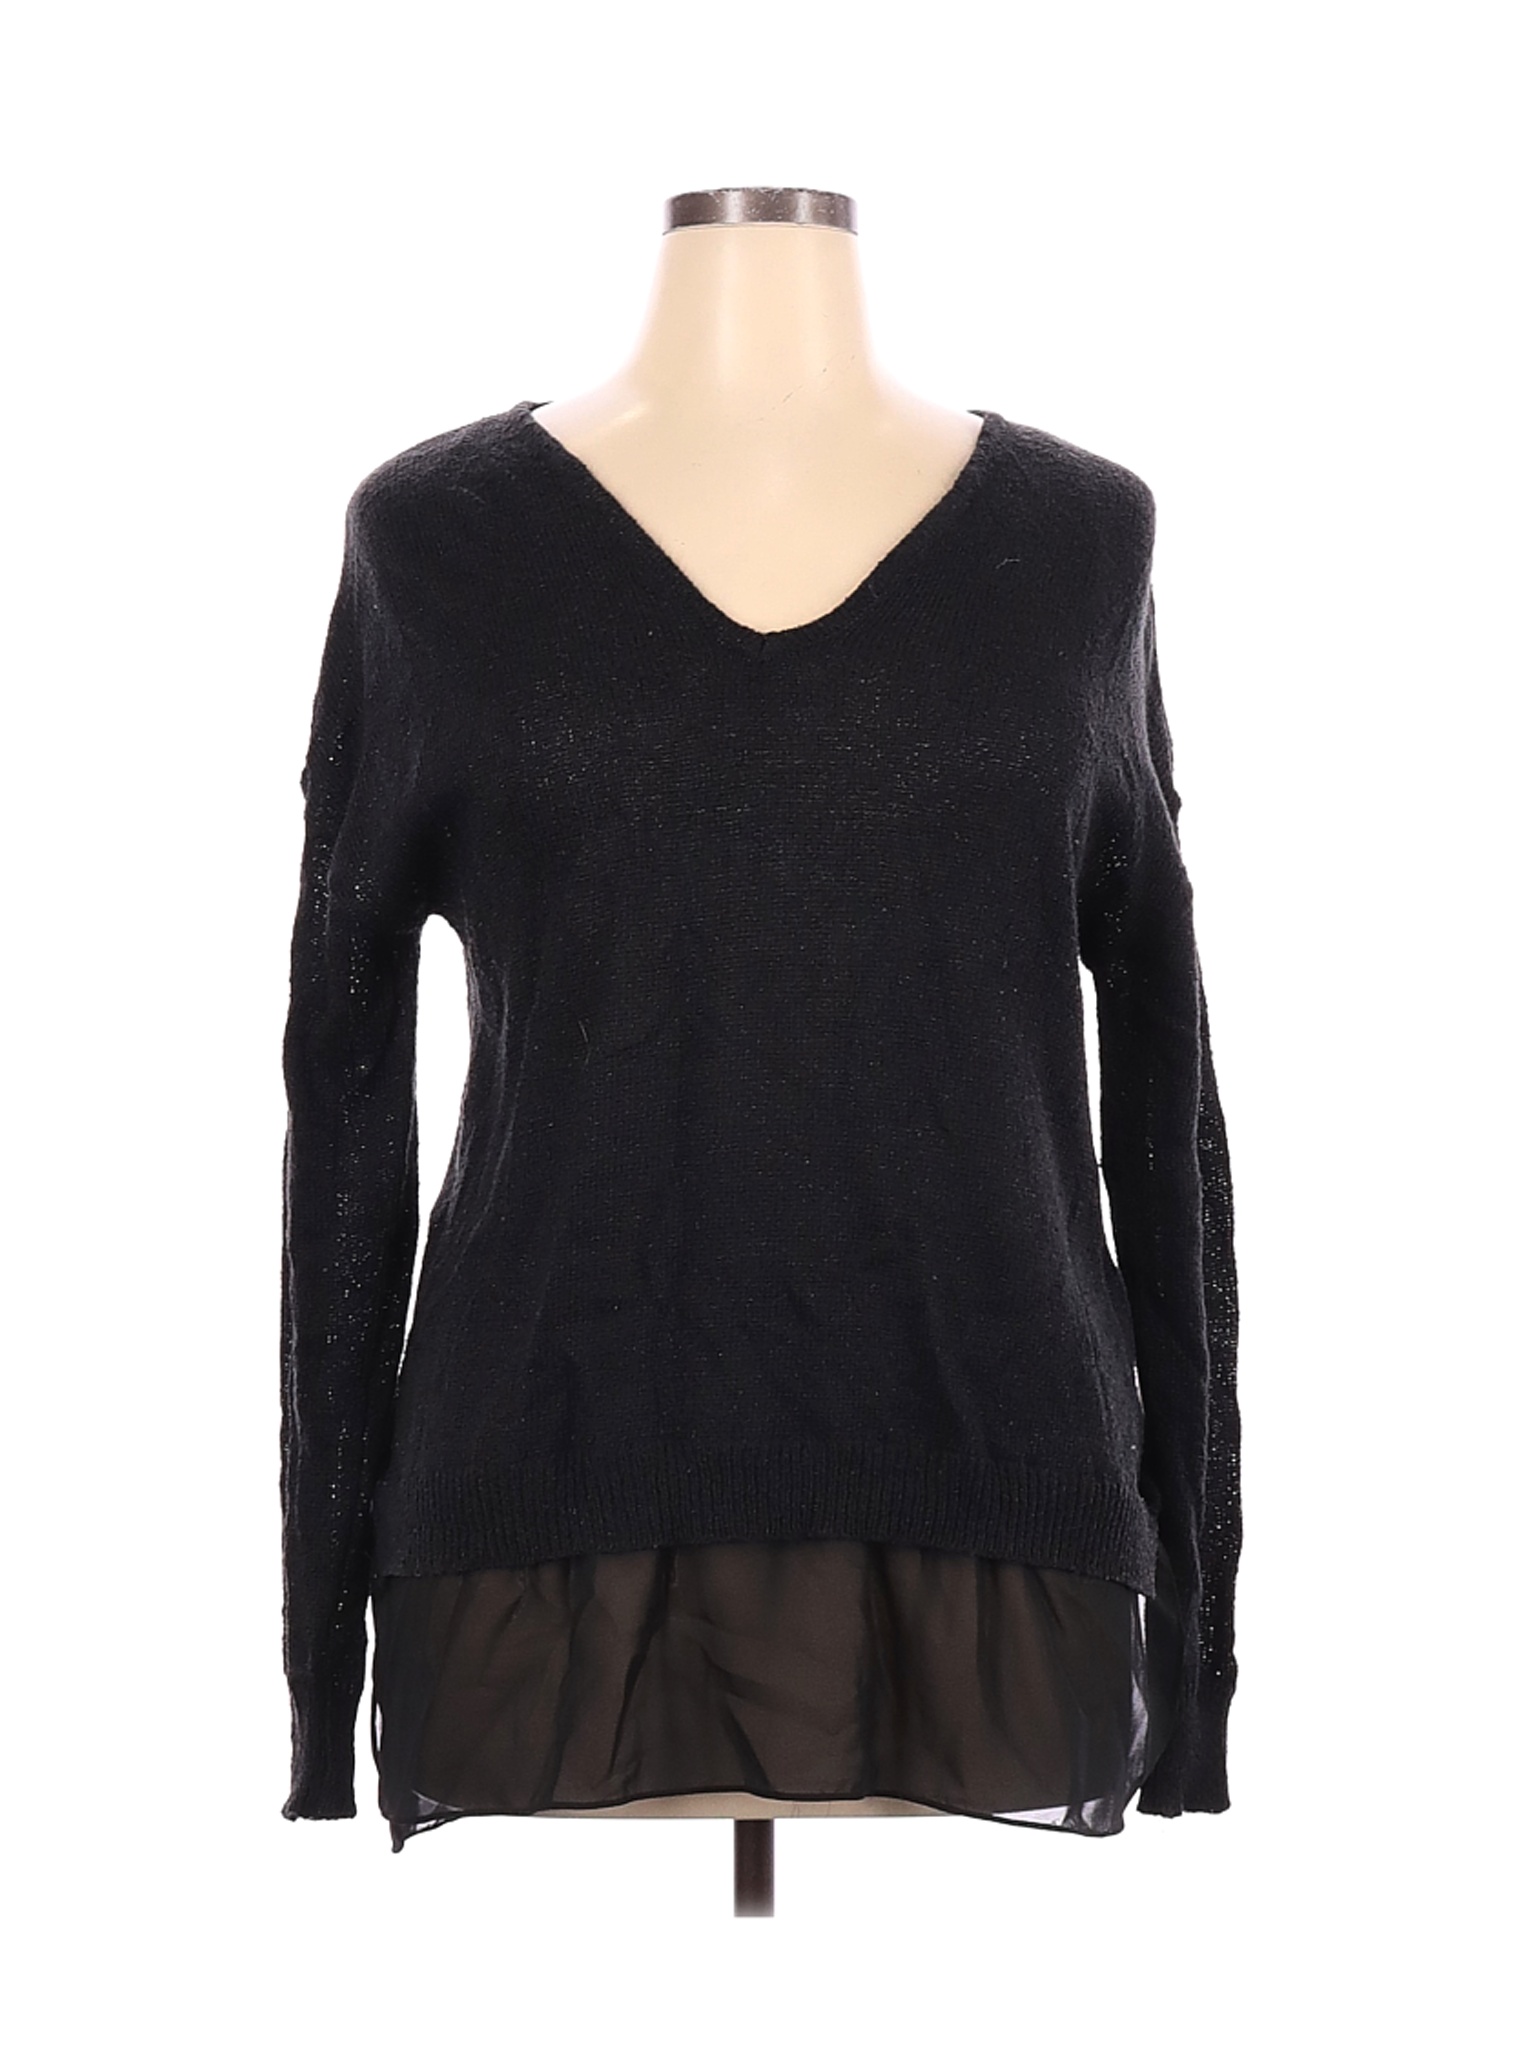 Nine West Women Black Pullover Sweater XL | eBay